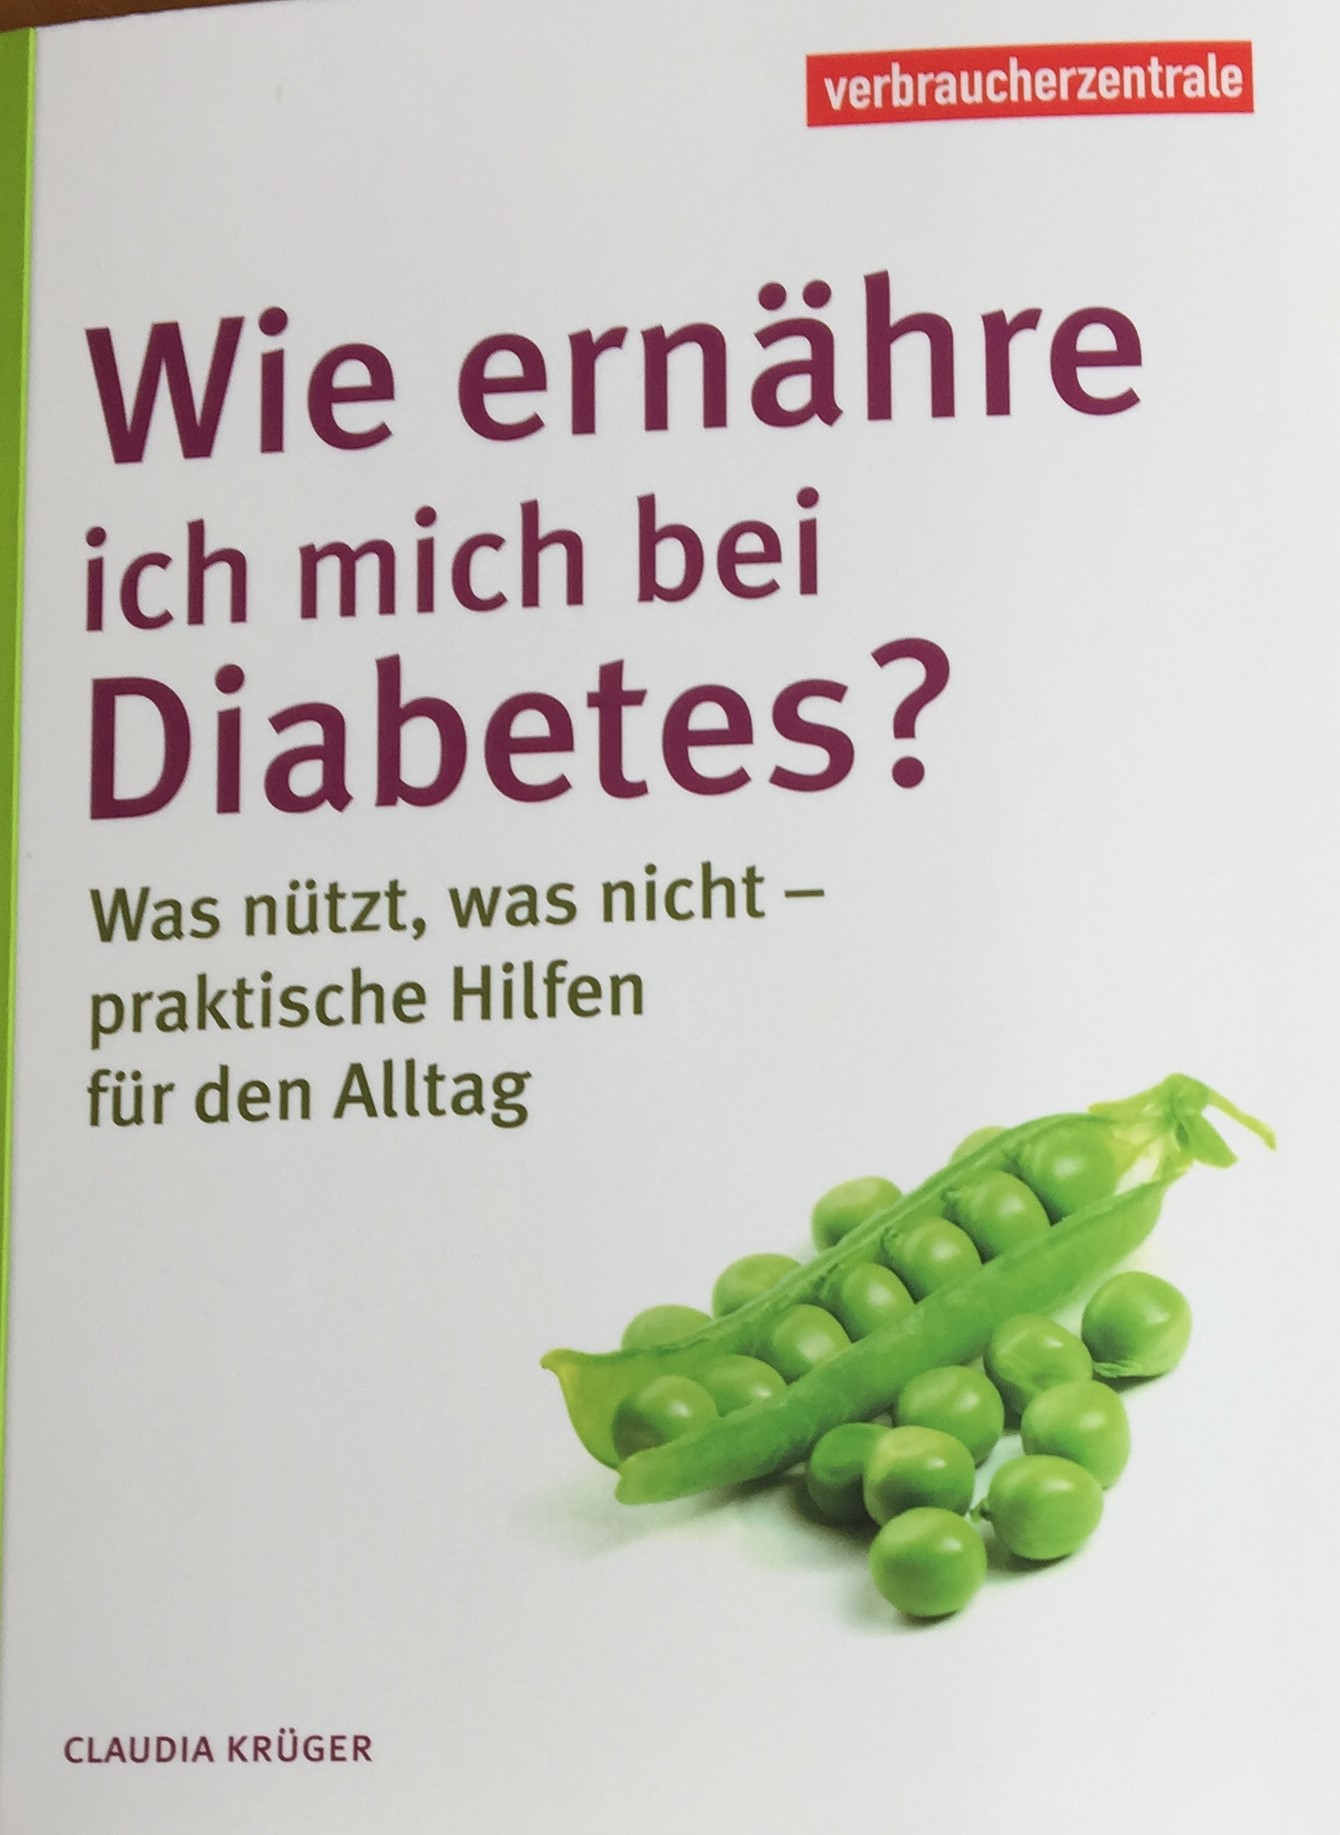 Diabetes-Ratgeber.JPG